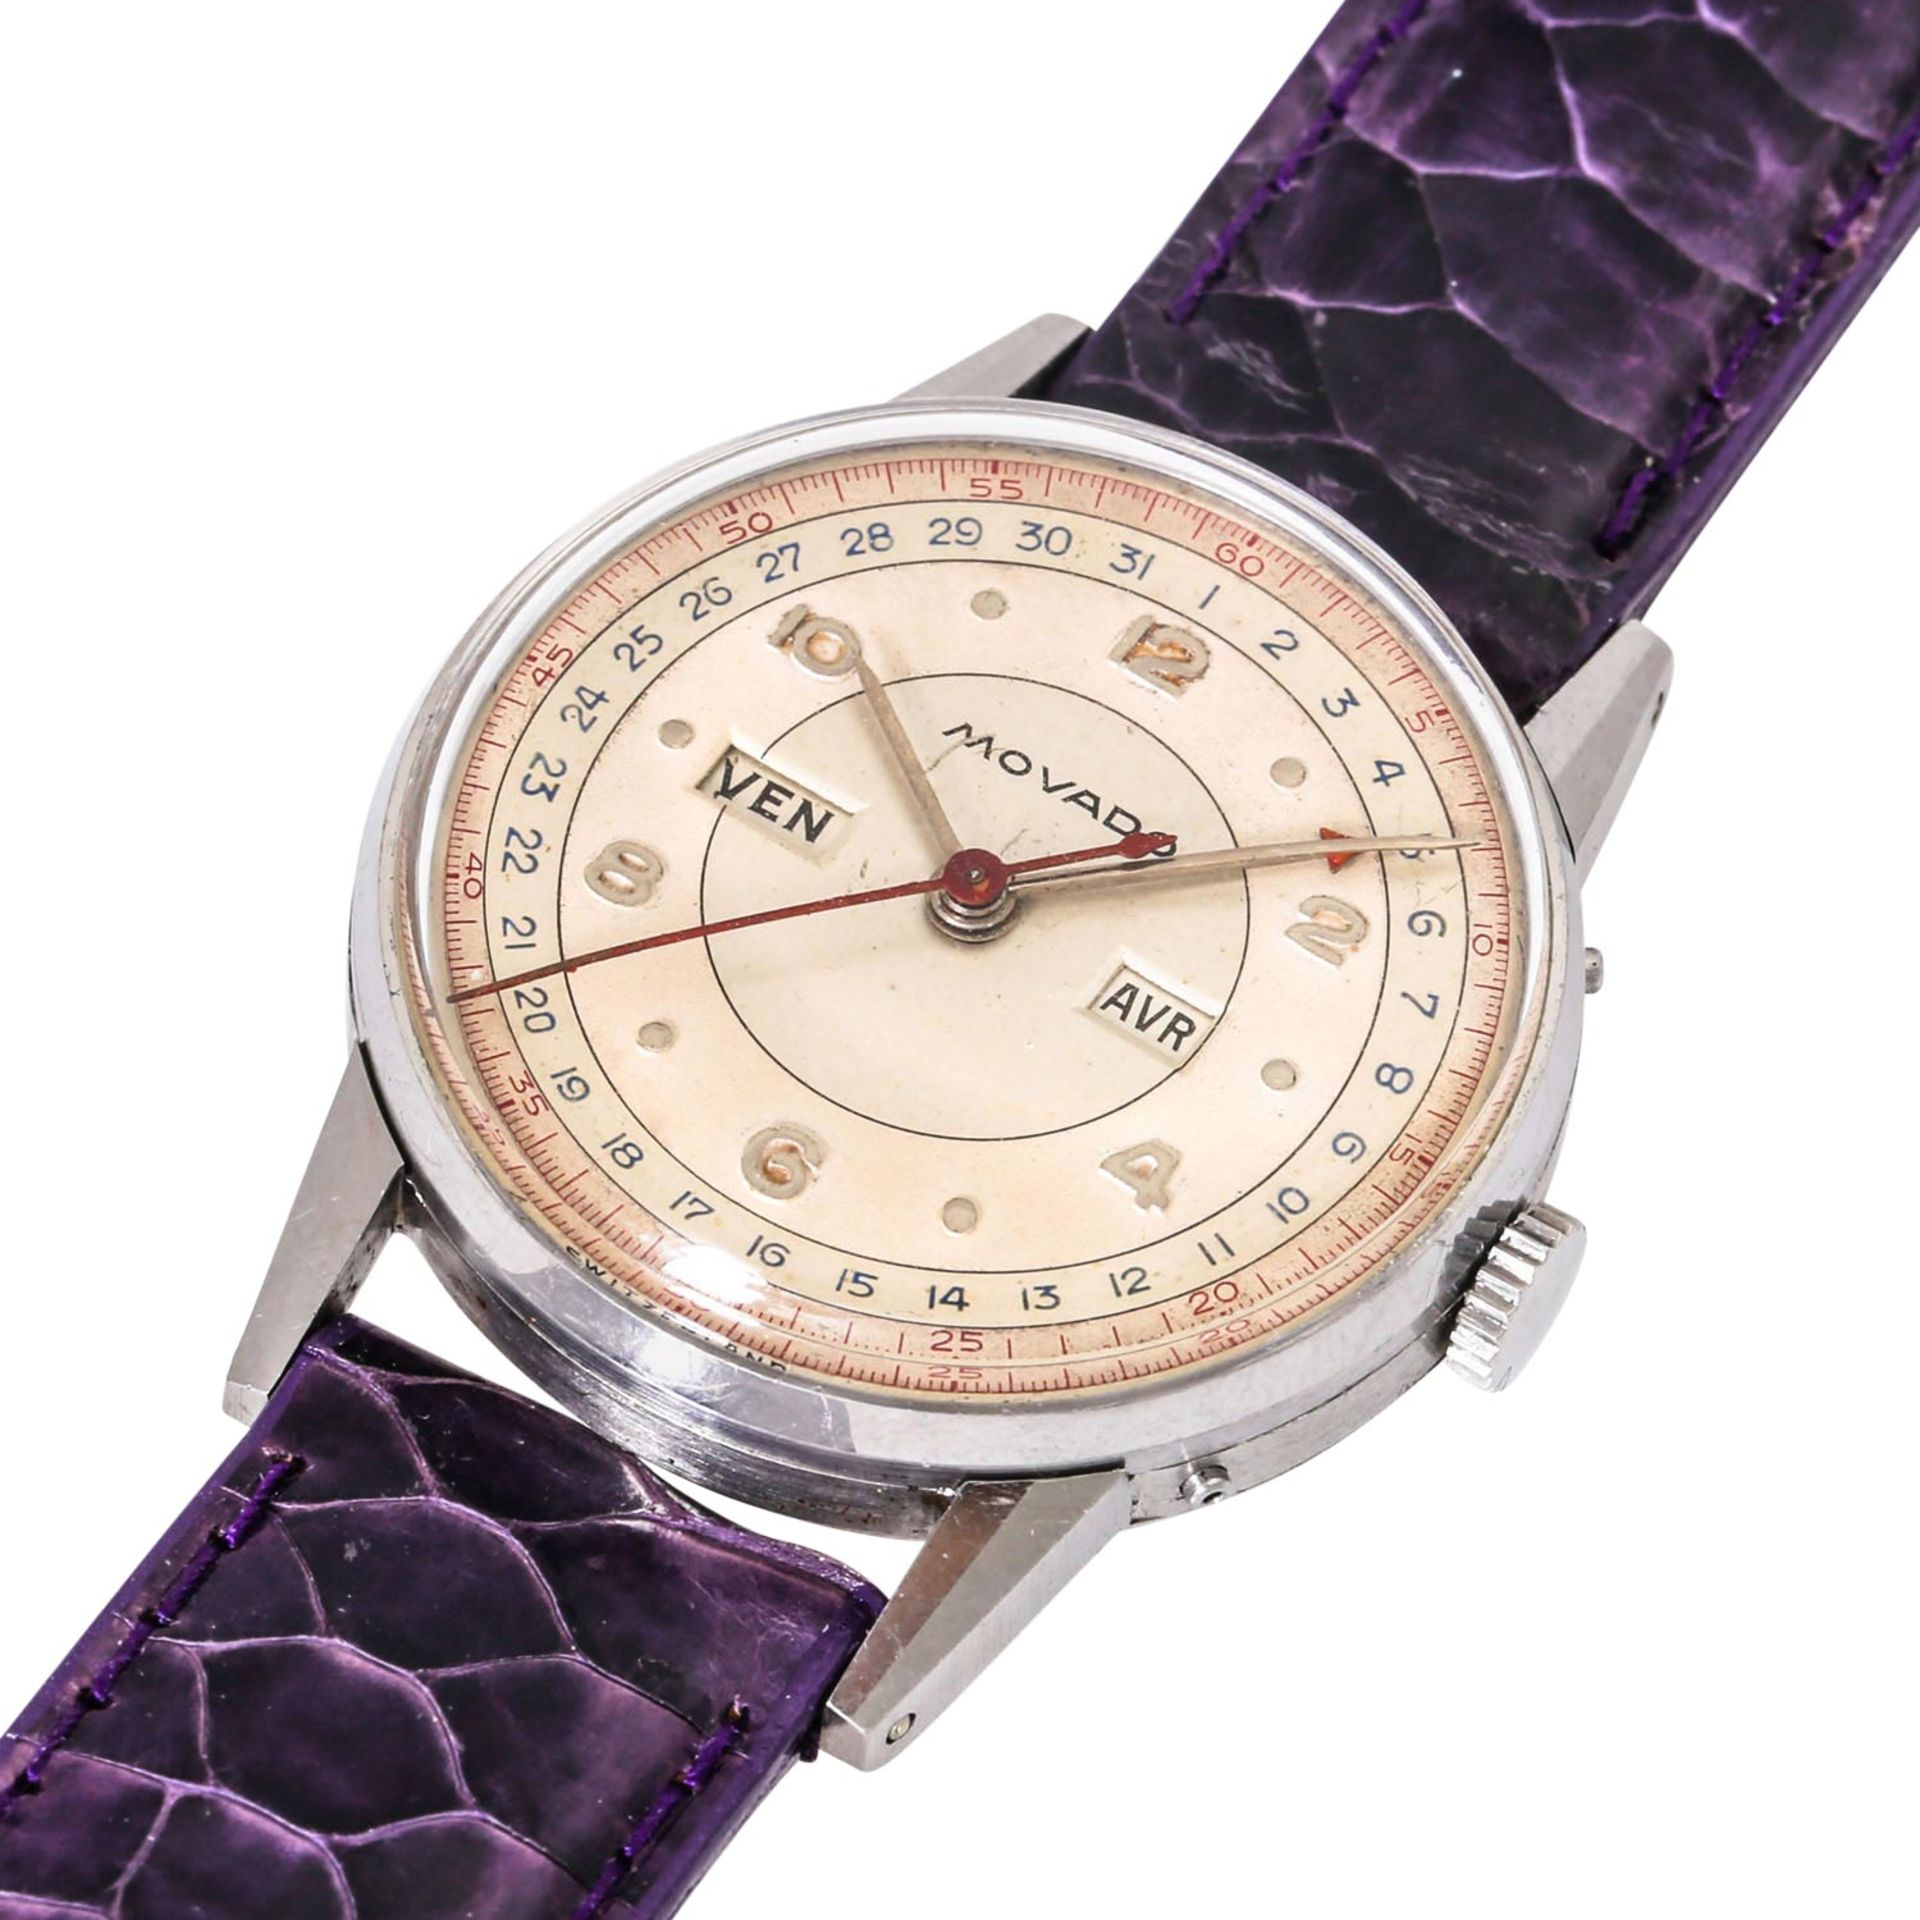 MOVADO Calendograf Vintage Triple Date Armbanduhr, Ref. 14816. Ca. 1950er Jahre. - Bild 5 aus 6